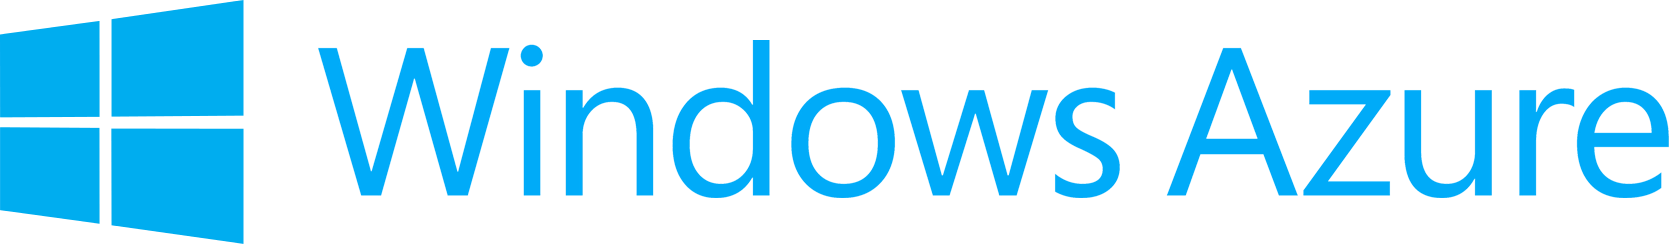 Microsoft Windows Azure Logo - Microsoft Azure | Logopedia | FANDOM powered by Wikia